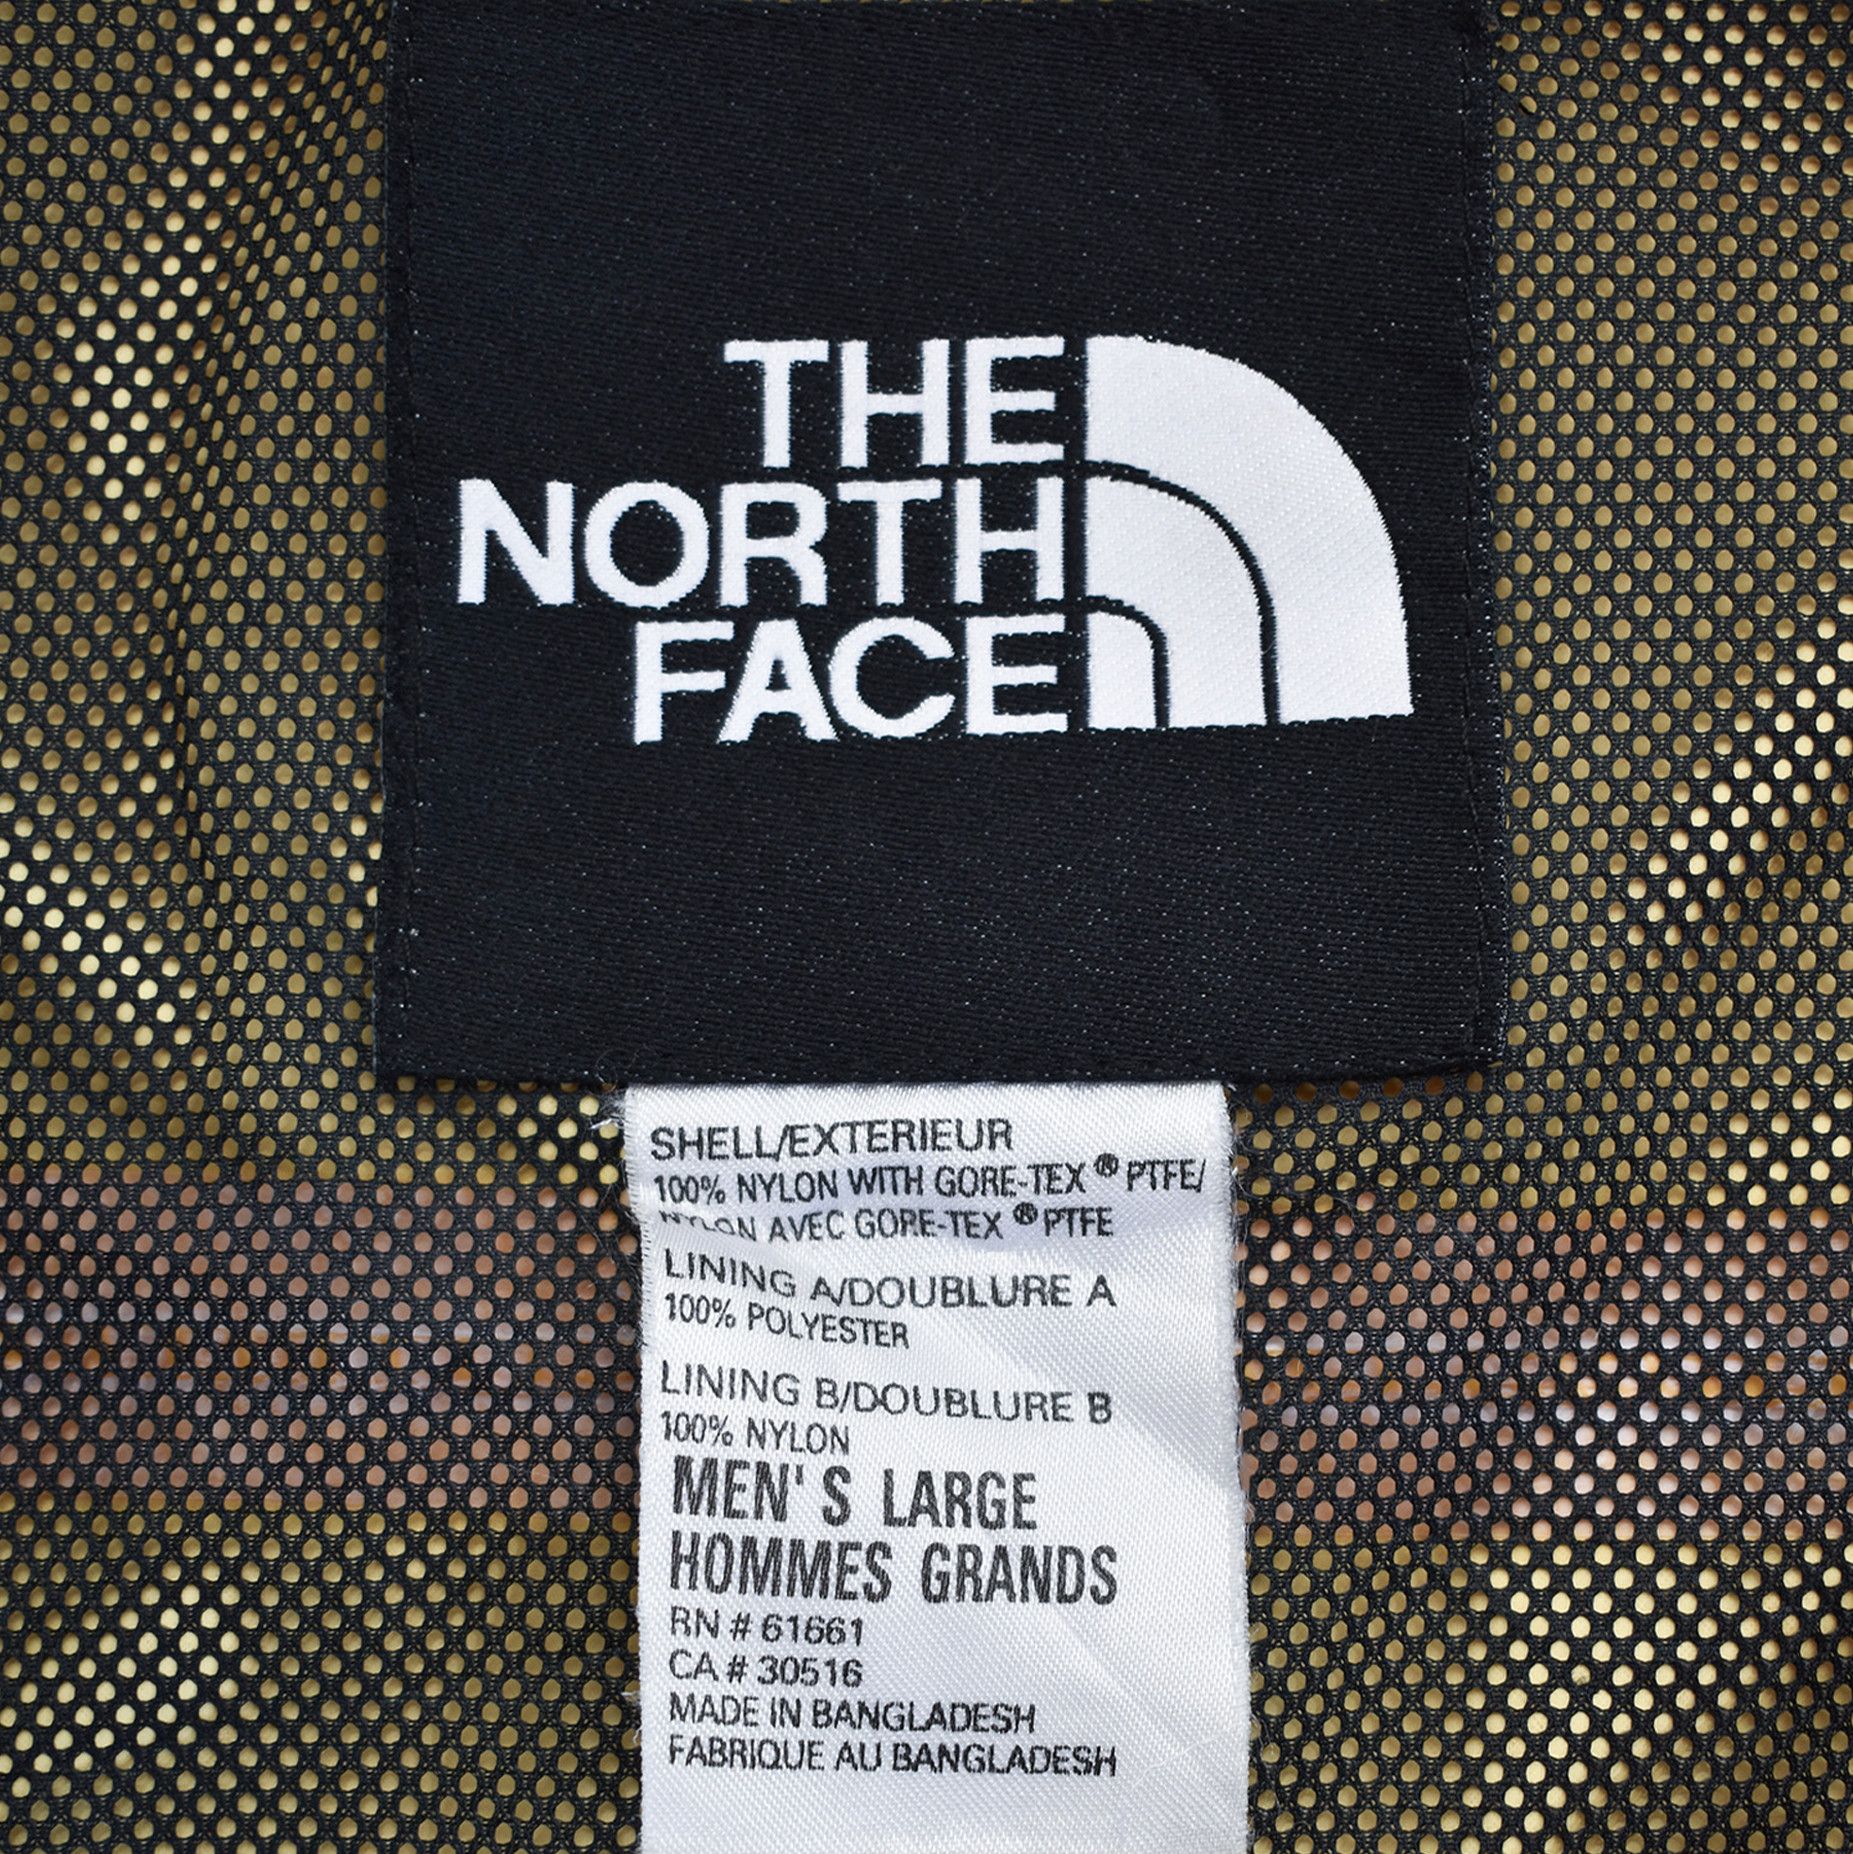 The North Face *MINT* *RARE* Vintage Yellow North Face Gore-Tex Jacket 90s Size US L / EU 52-54 / 3 - 4 Thumbnail